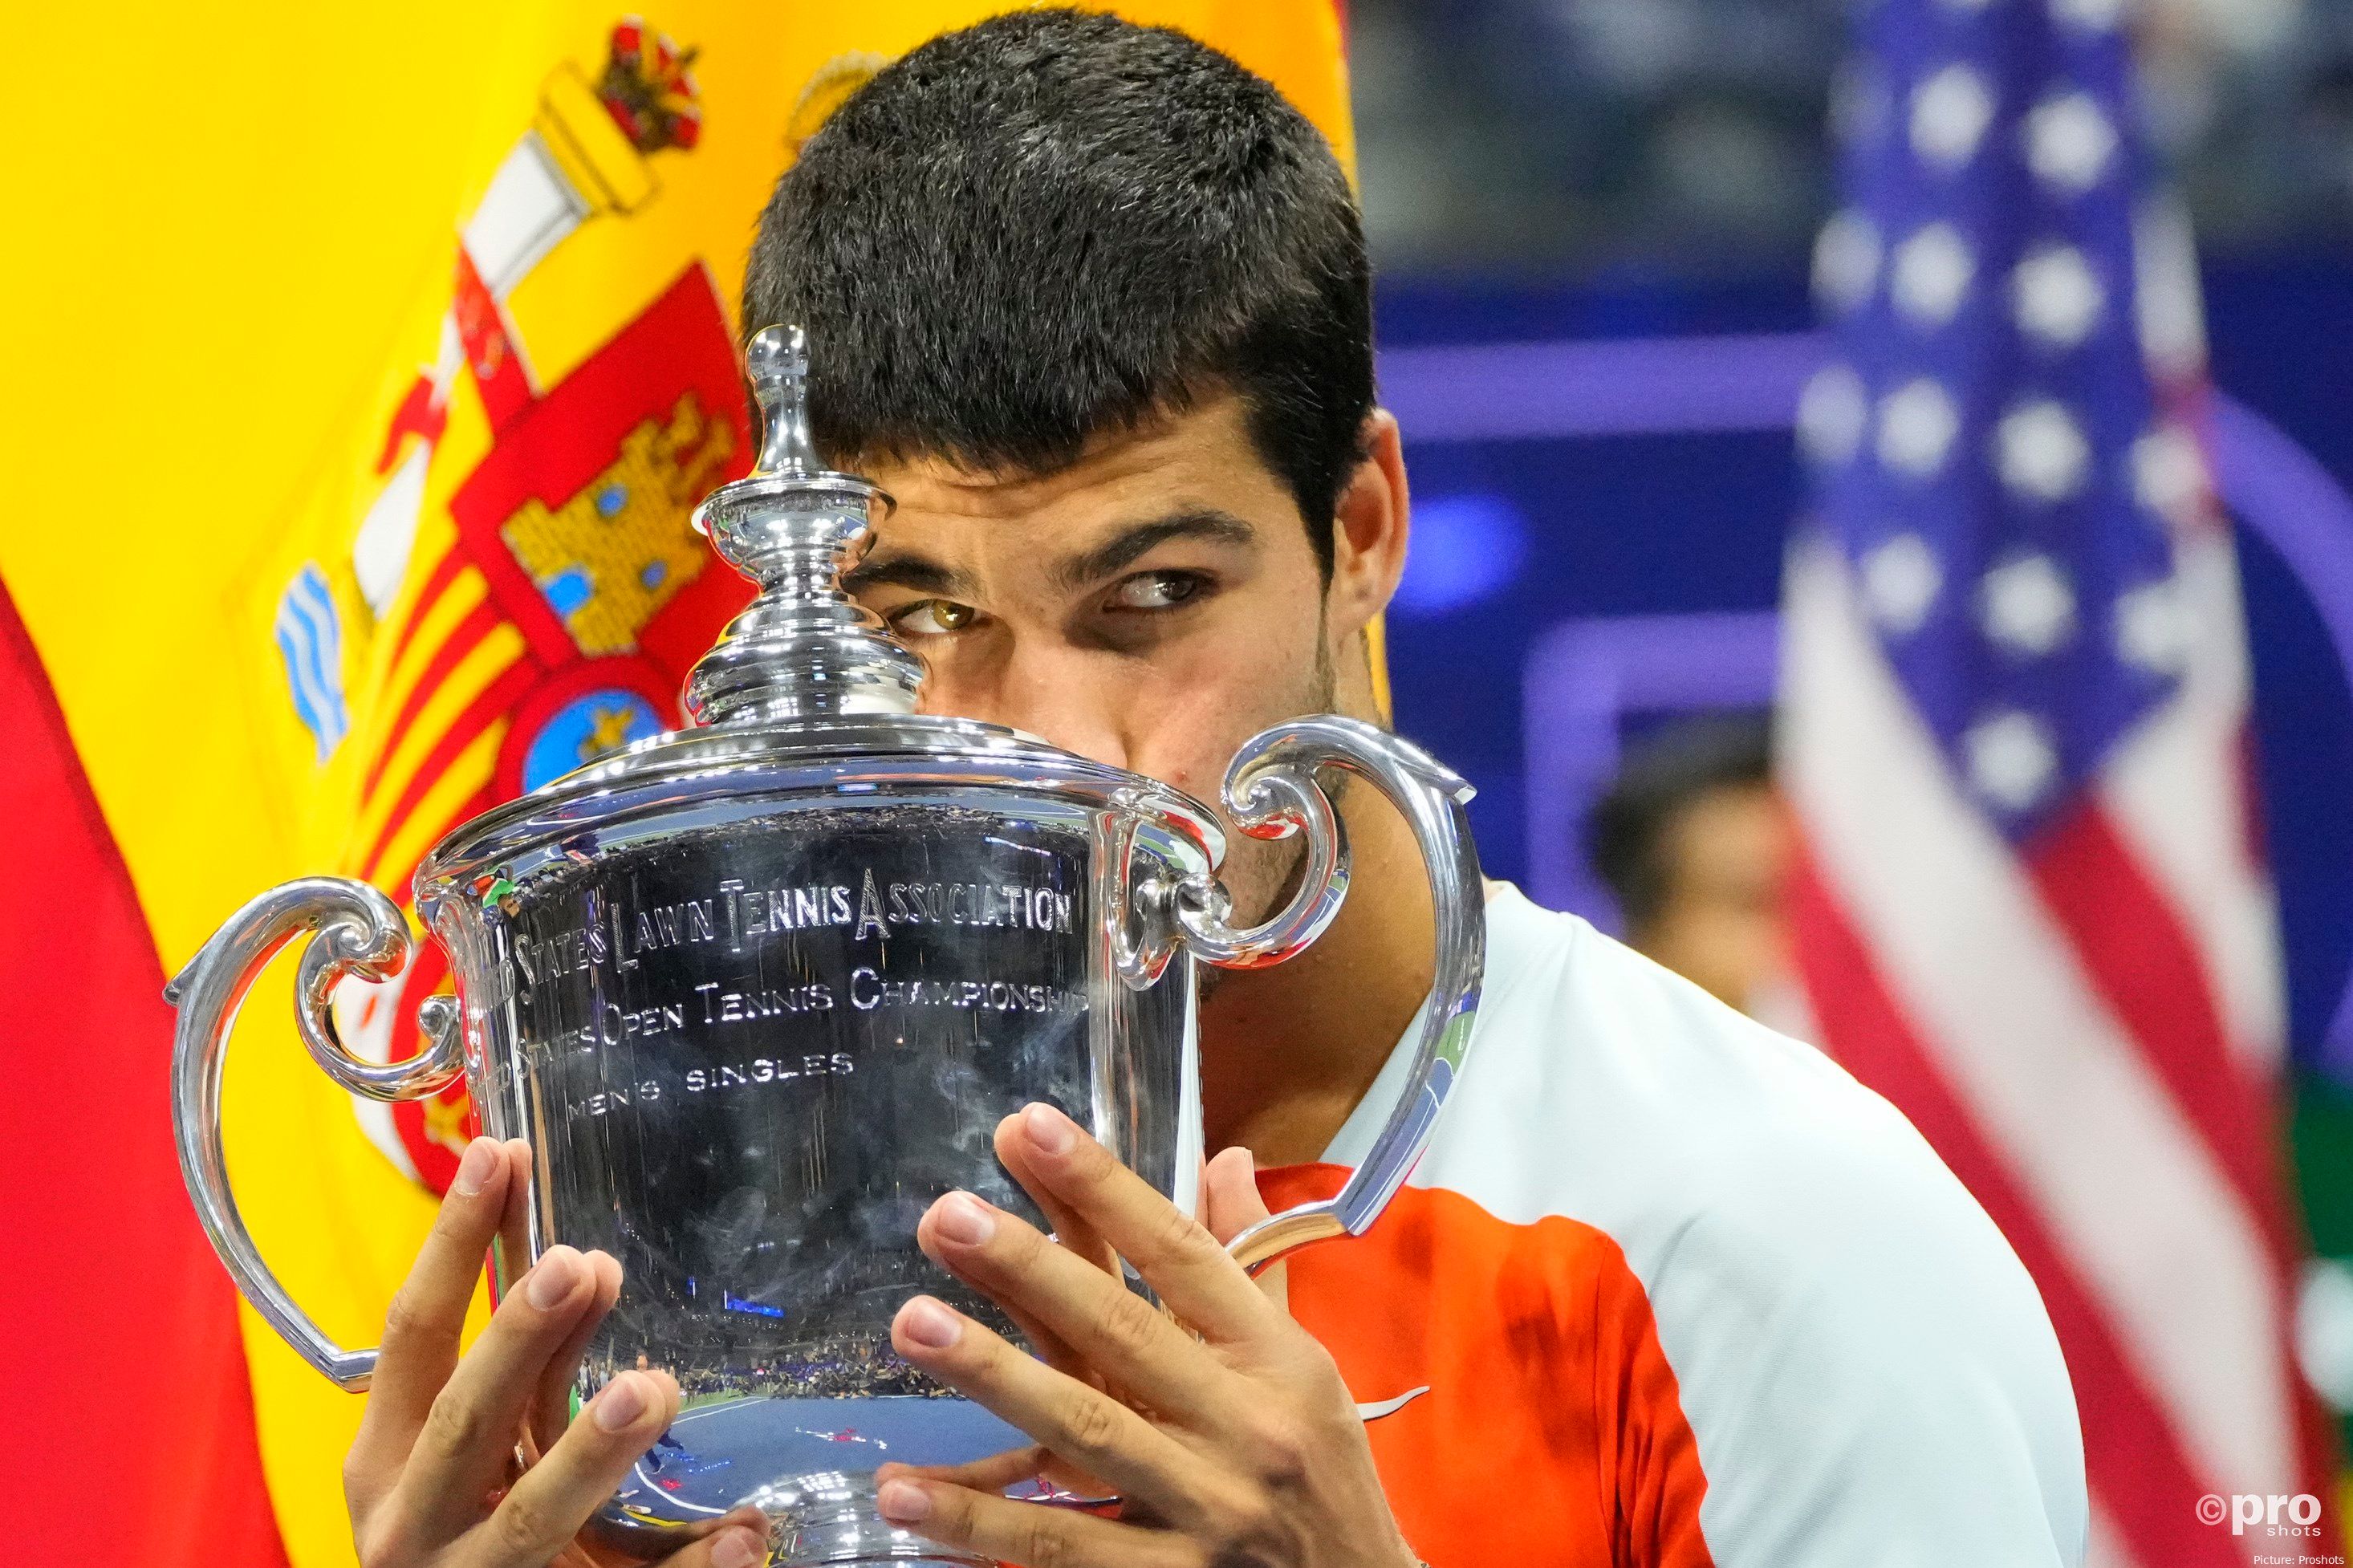 Alcaraz won his first Grand Slam title at&nbsp; 2022 US Open.